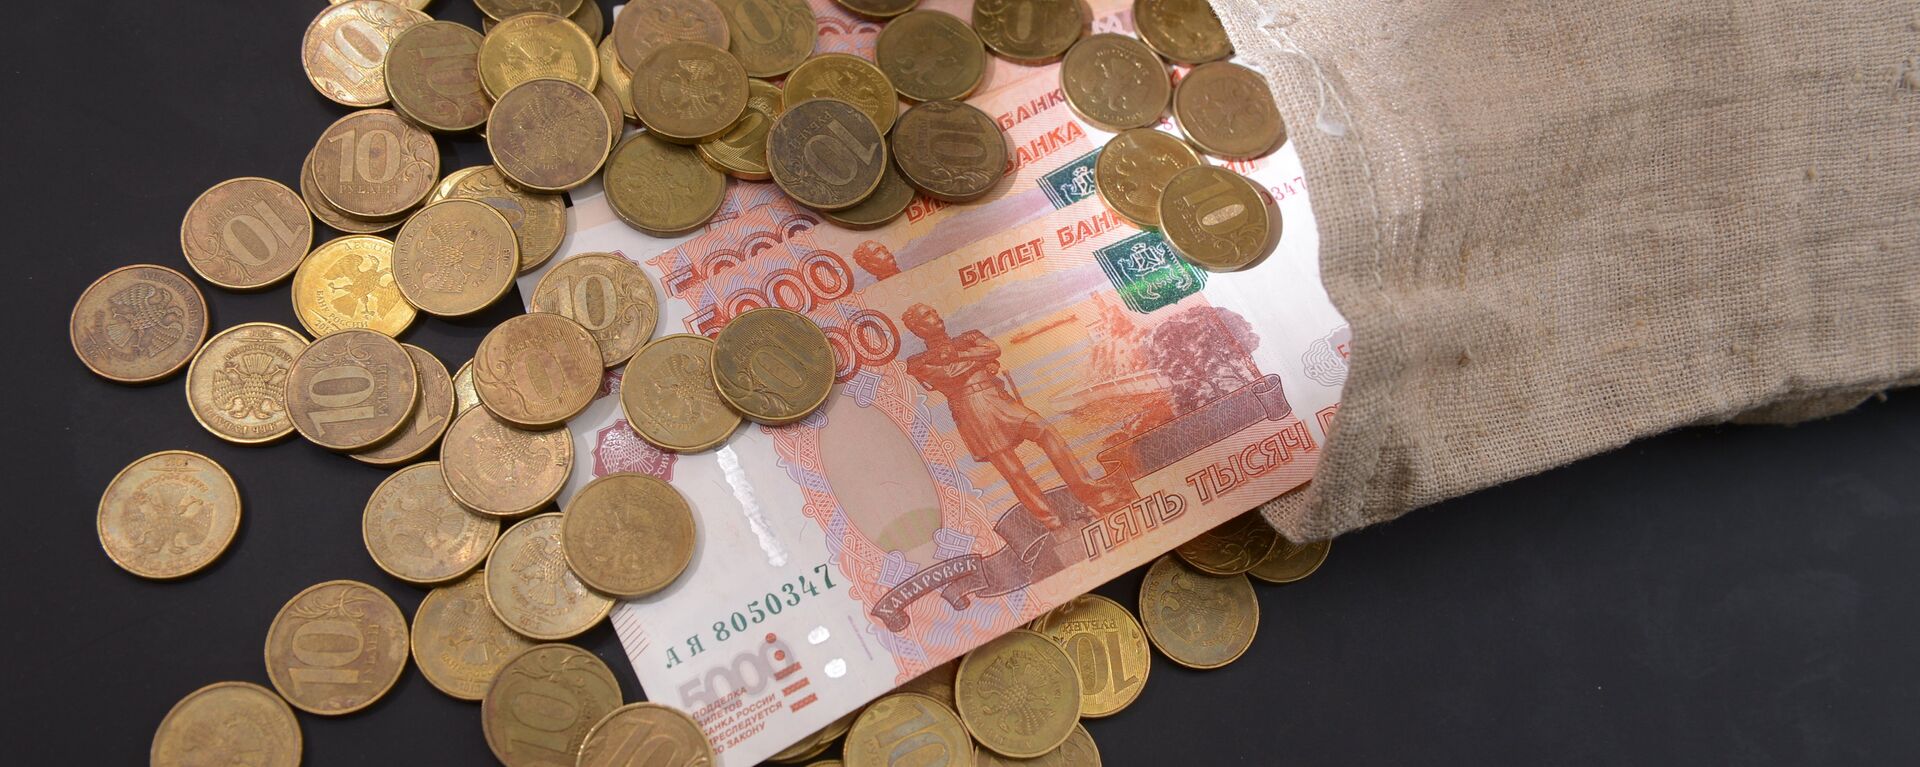 Monedas y billetes del rublo ruso - Sputnik Mundo, 1920, 07.06.2022